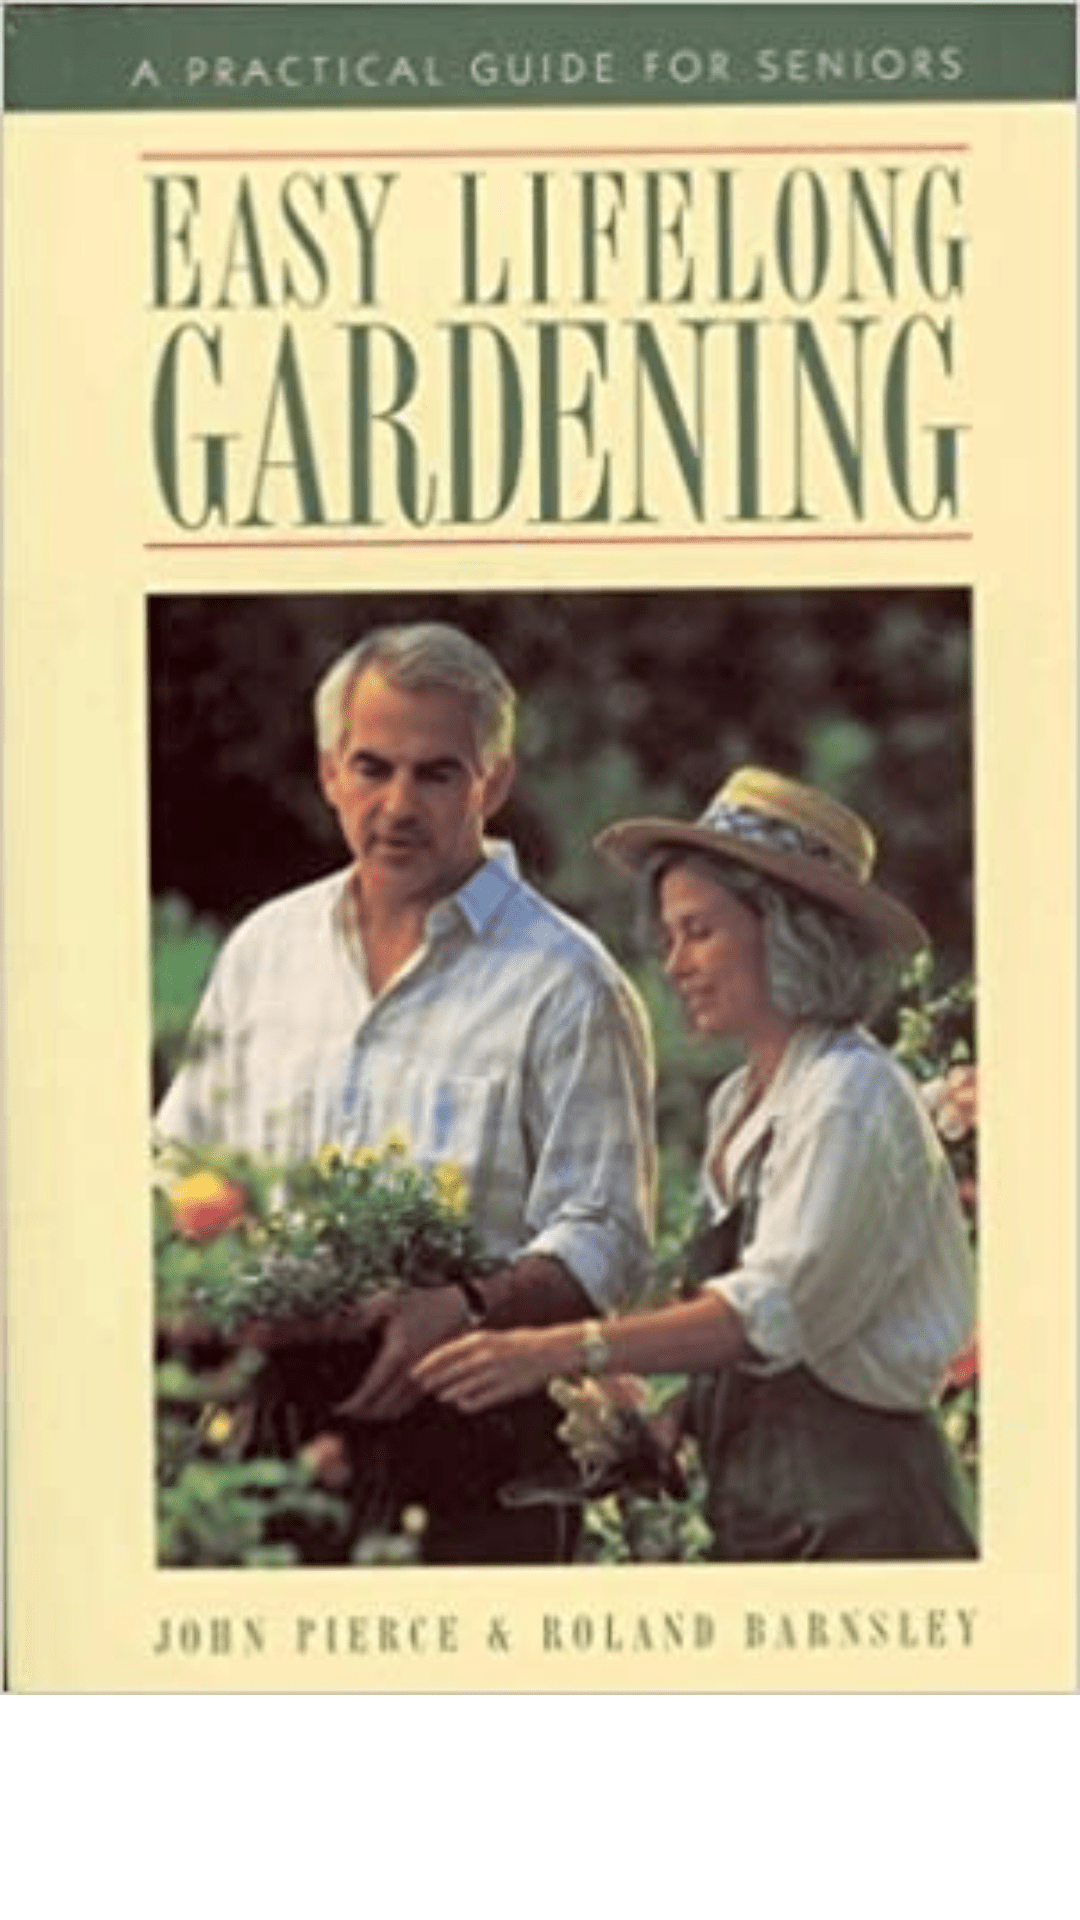 Easy Lifelong Gardening